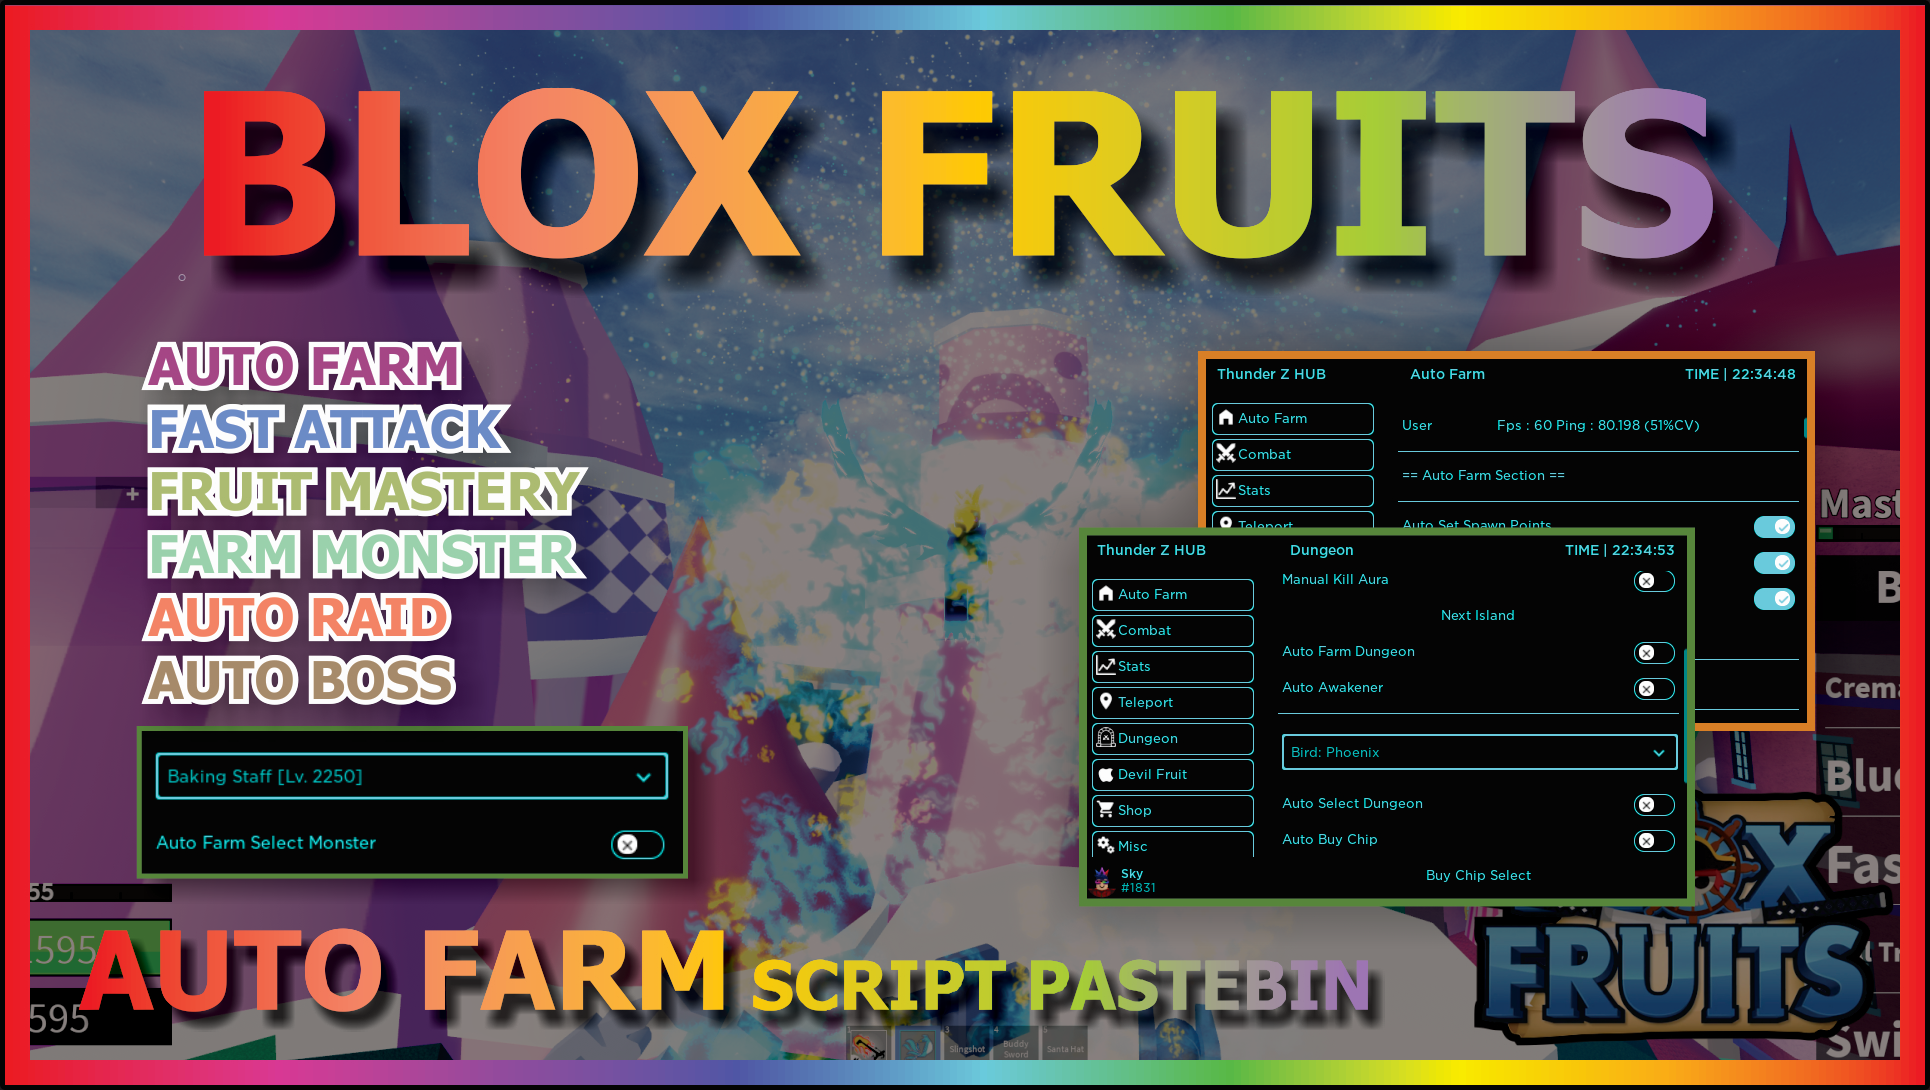 Blox-Fruits/Script at main · ZZZCCSZZ/Blox-Fruits · GitHub